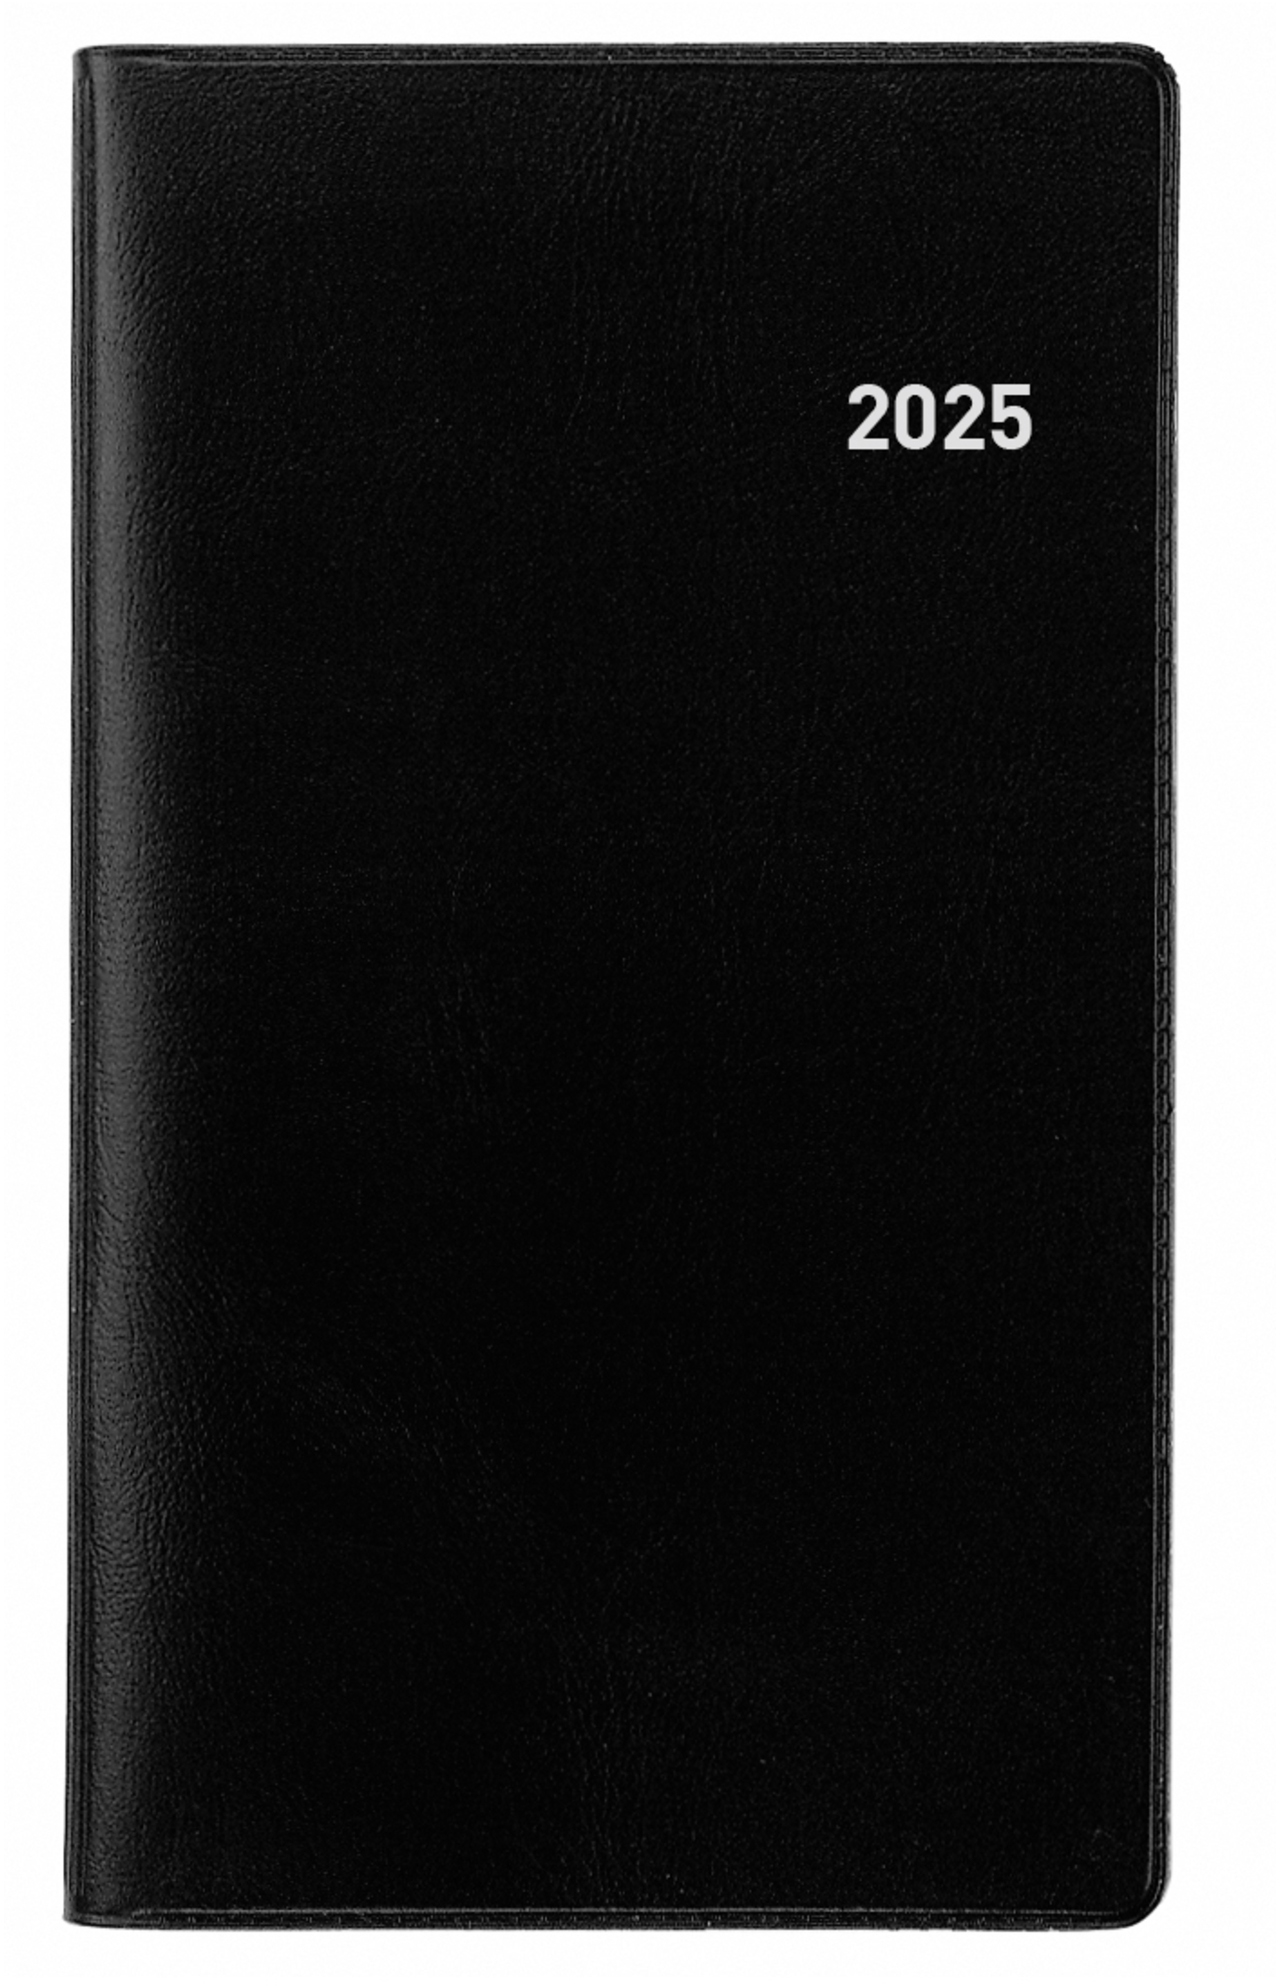 BIELLA Agenda Bern 2025 851572020025 1S/1P noir ML 8.7x15.3cm